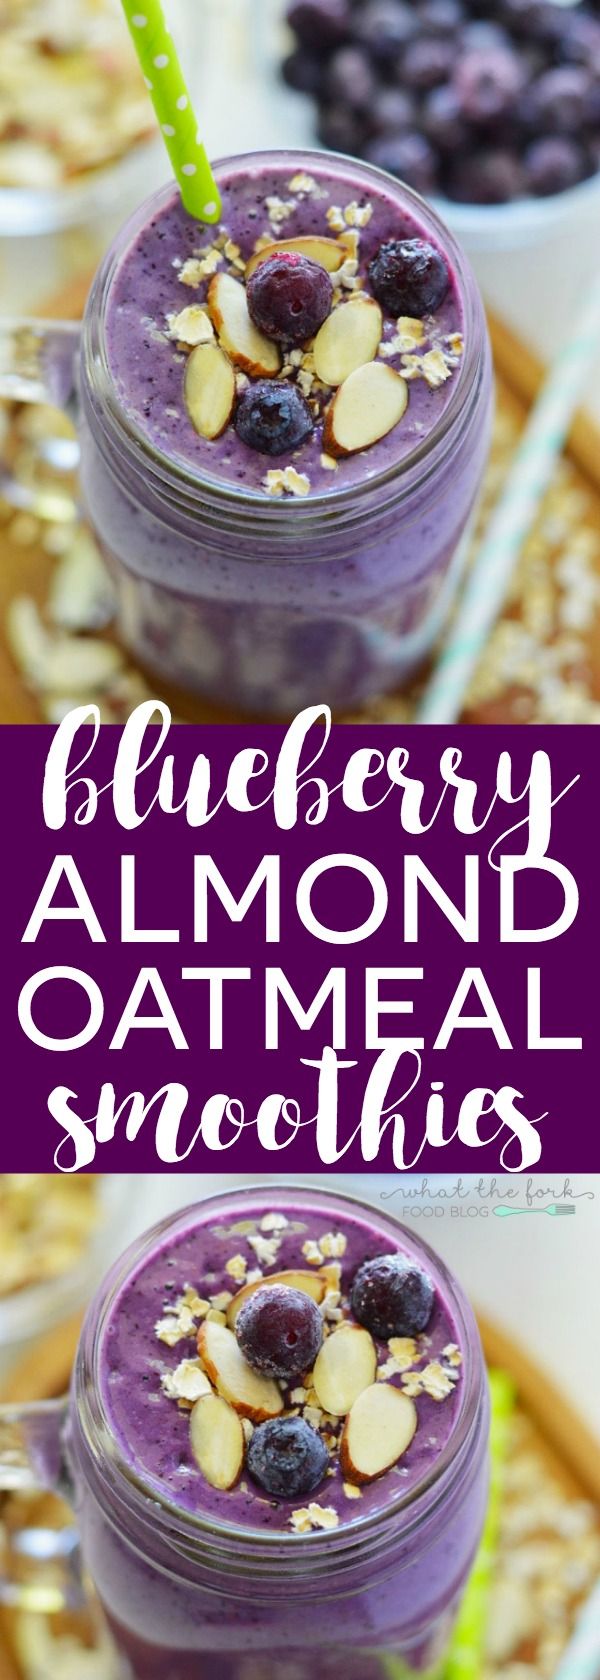 Blueberry Almond Oatmeal Smoothies